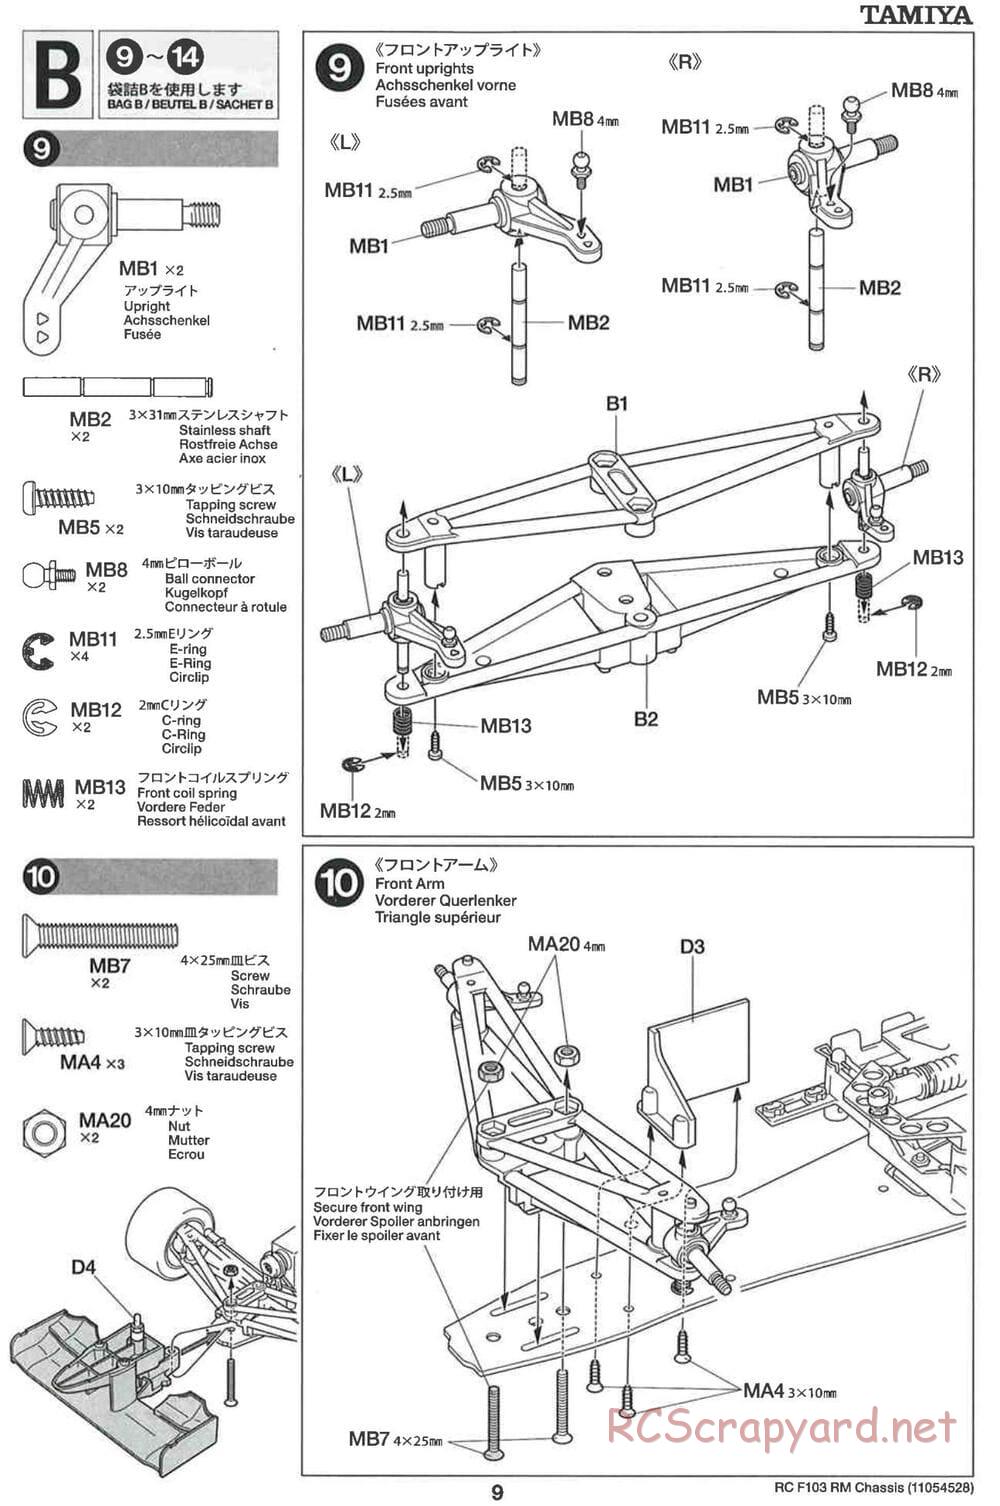 Tamiya - F103RM Chassis - Manual - Page 9